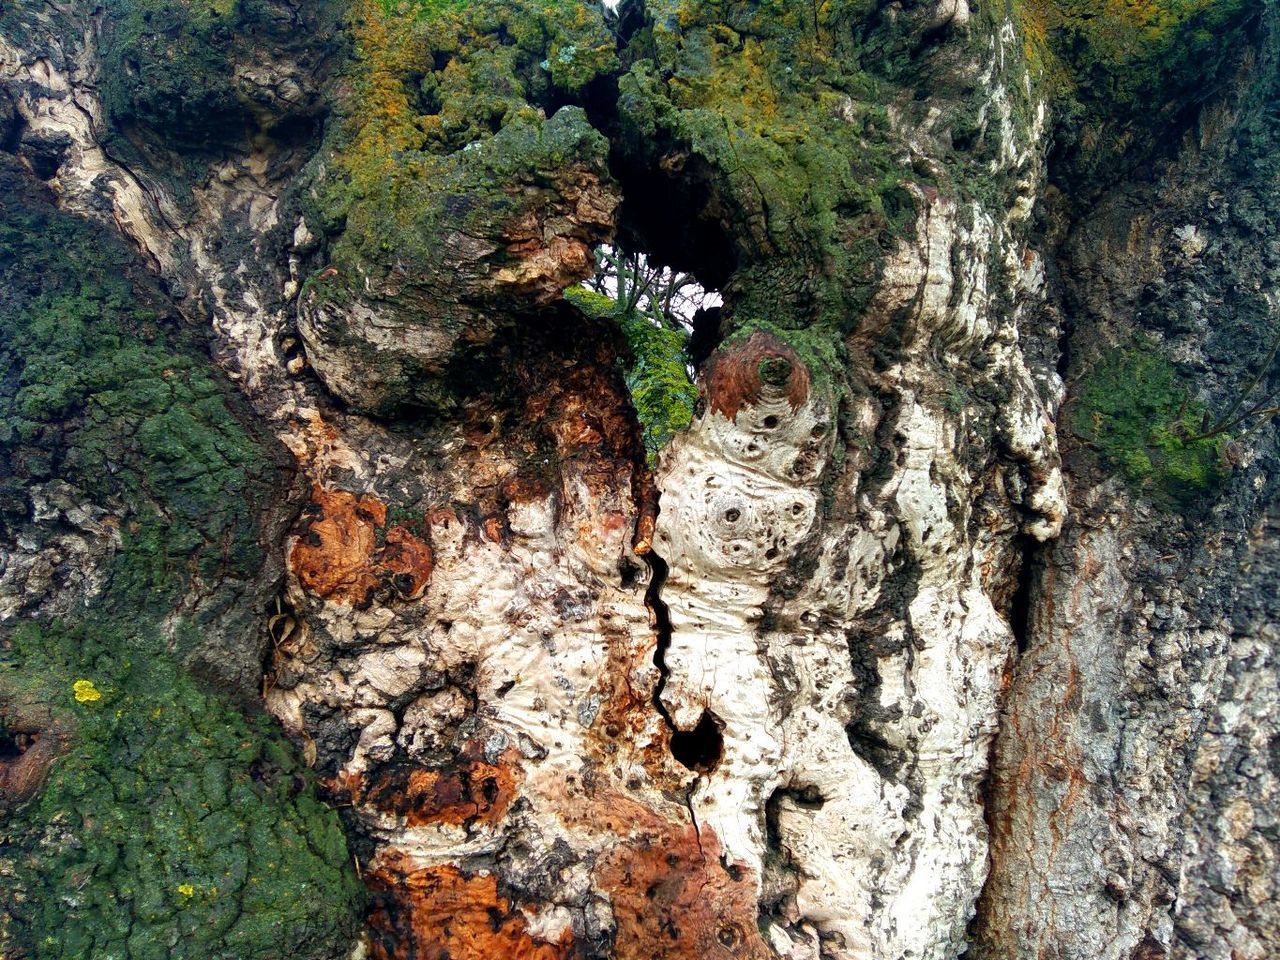 CLOSE-UP OF IGUANA ON TREE TRUNK